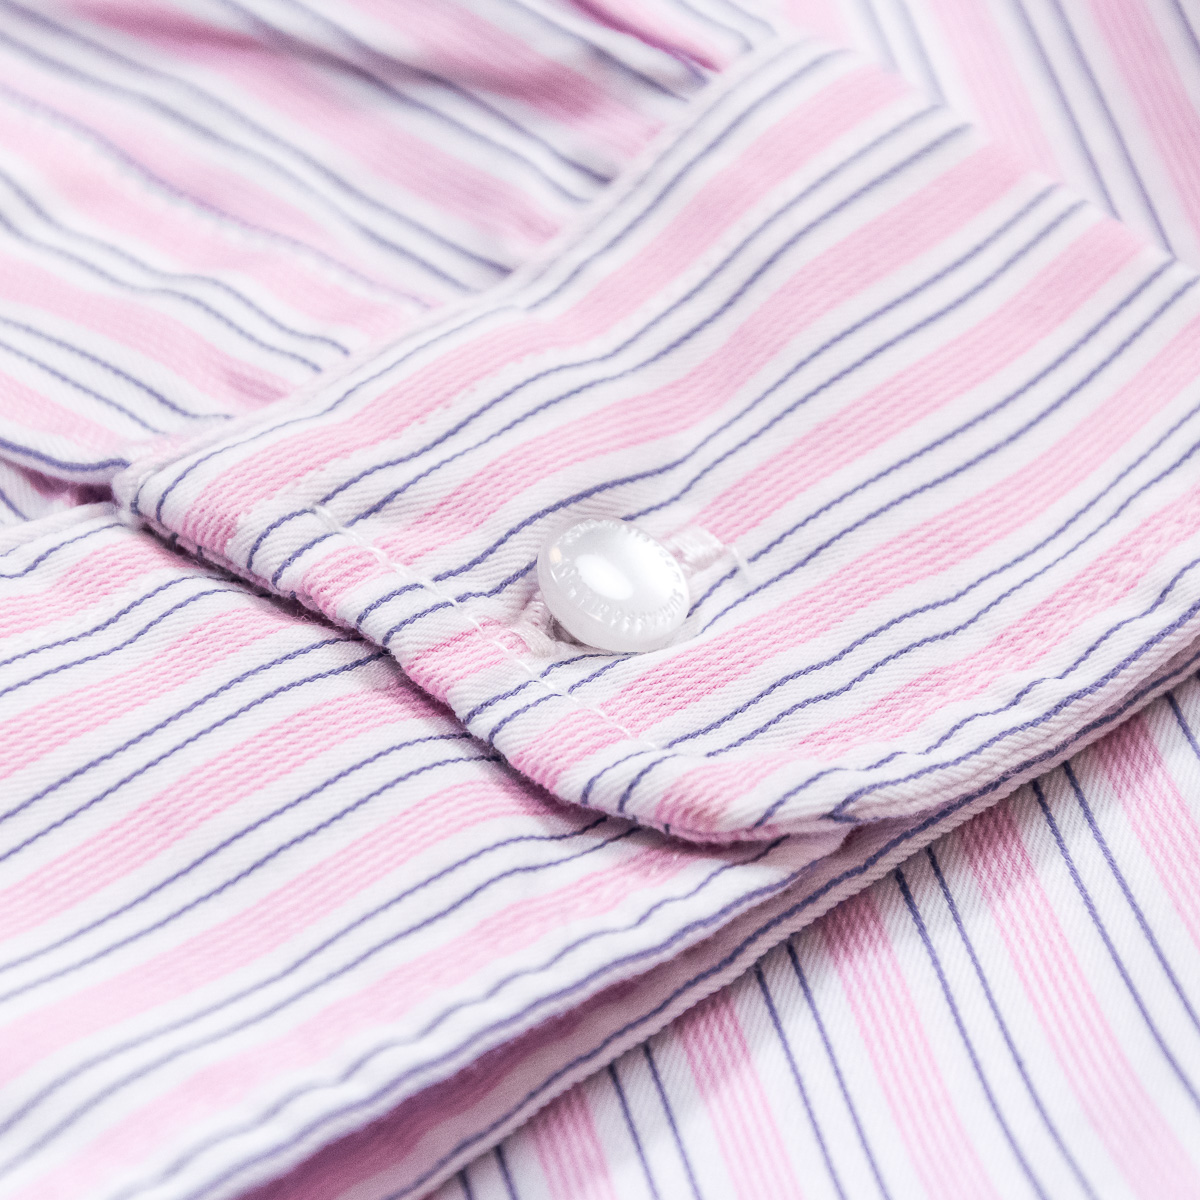 Beach Shirt - Pink Stripe